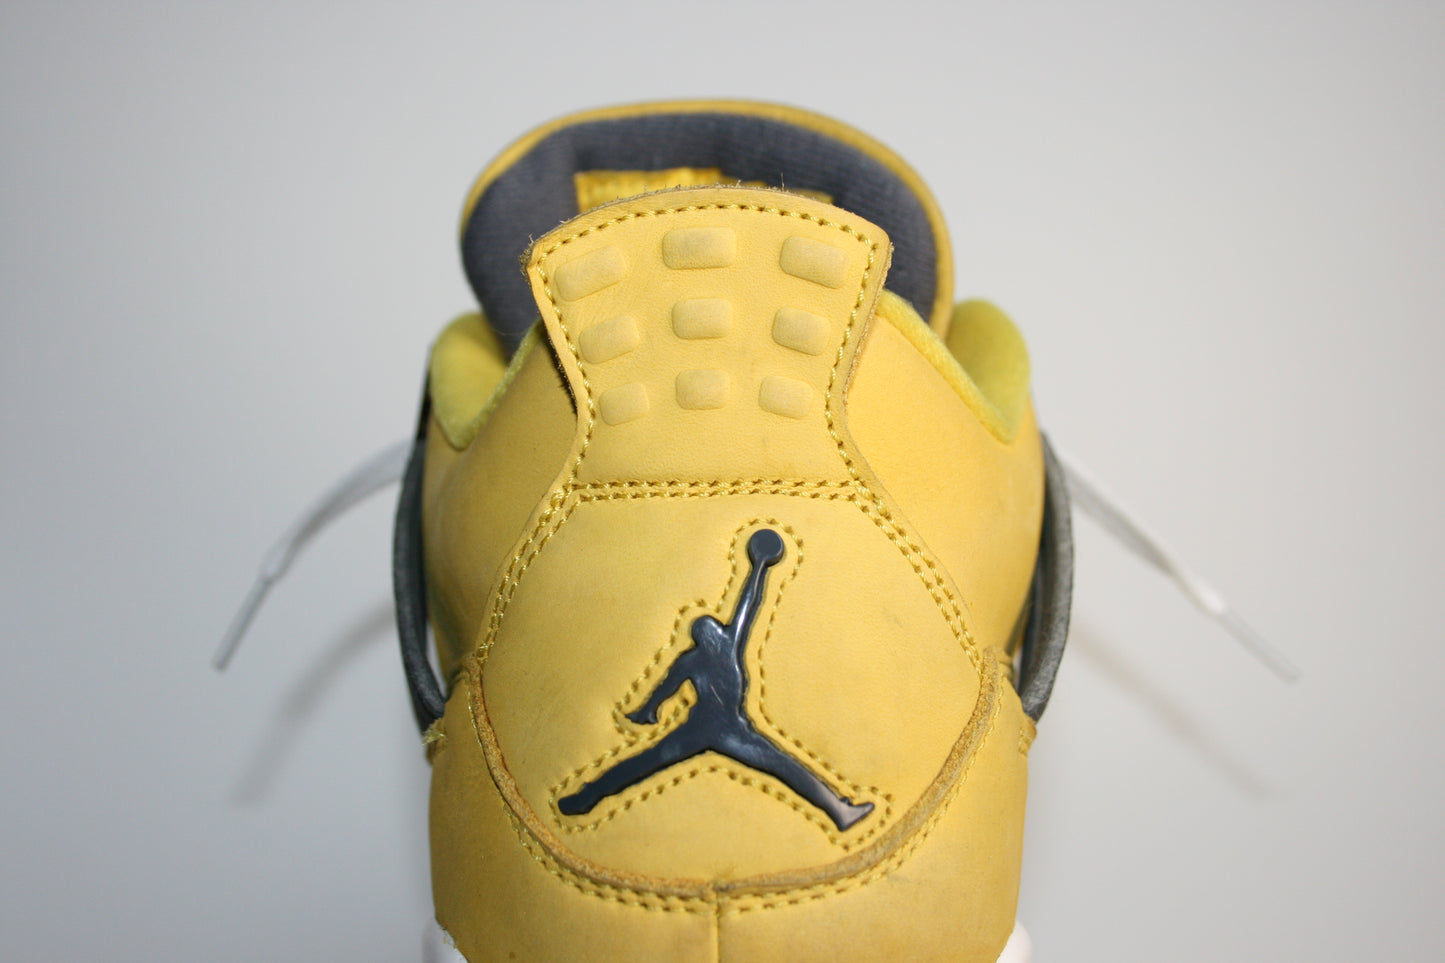 Nike Air Jordan 4 "Lightning"